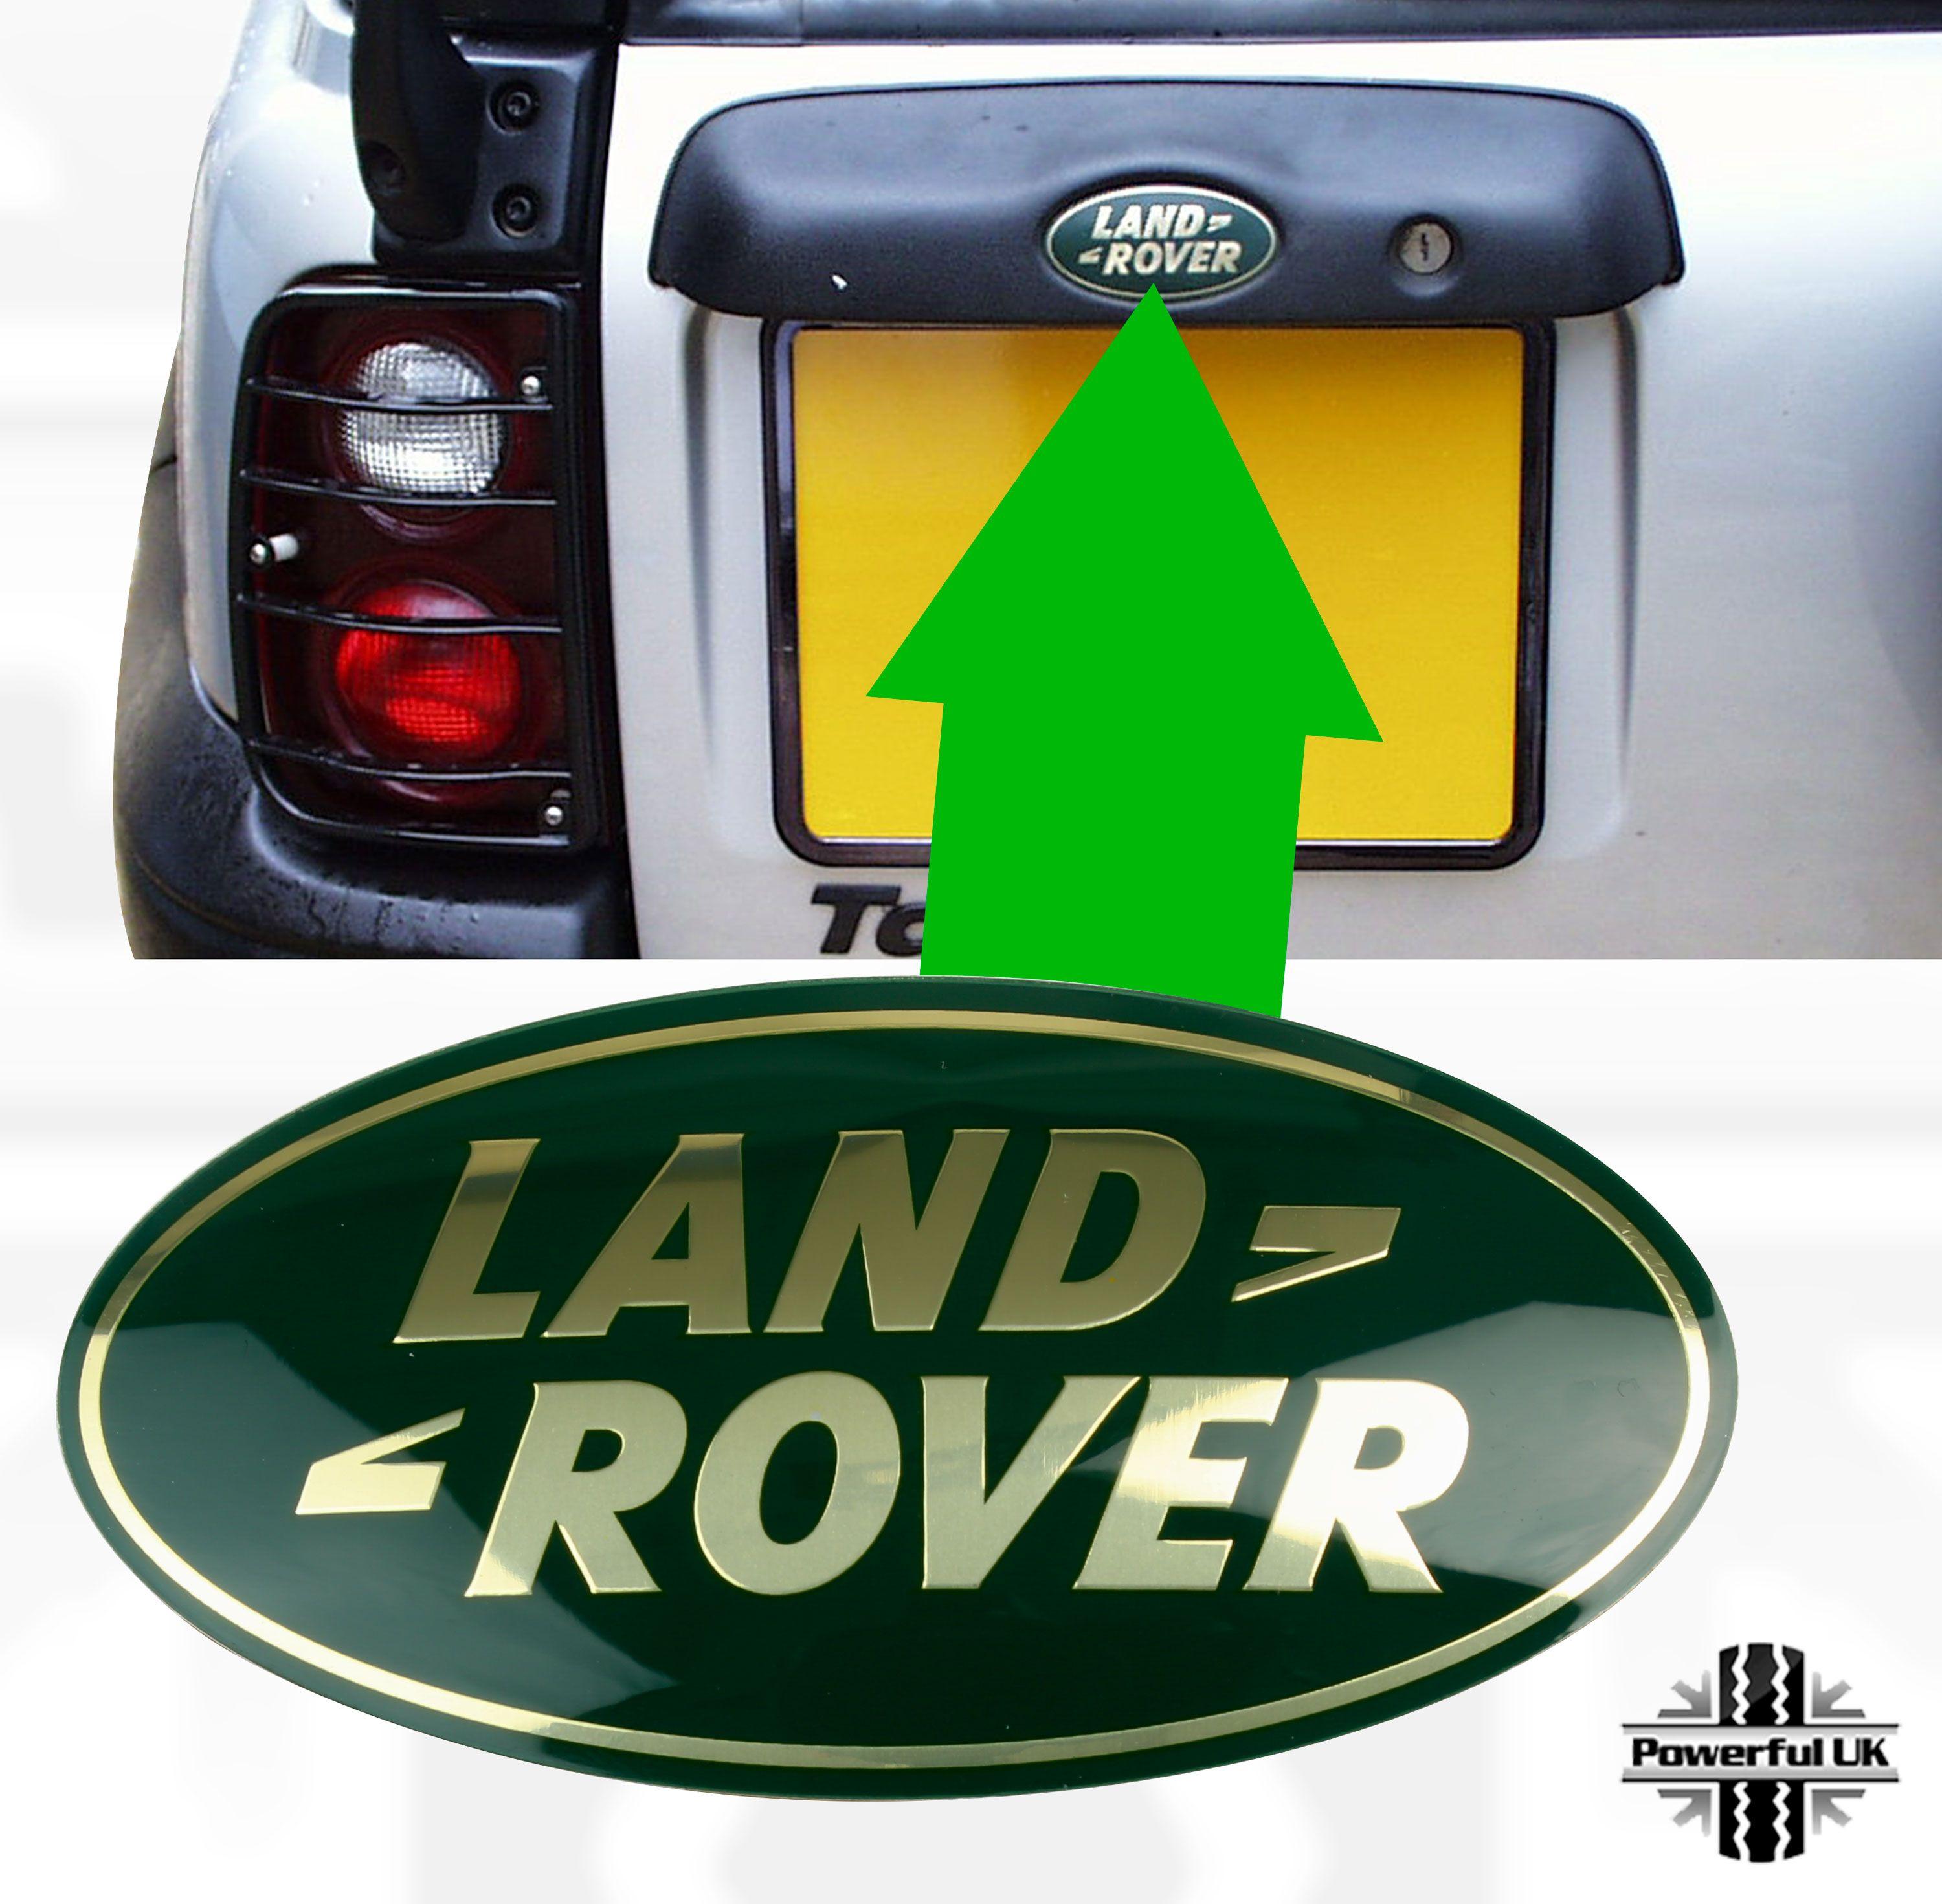 What Has a Green Oval Logo - Land Rover Freelander 1 GREEN GOLD rear door badge oval logo